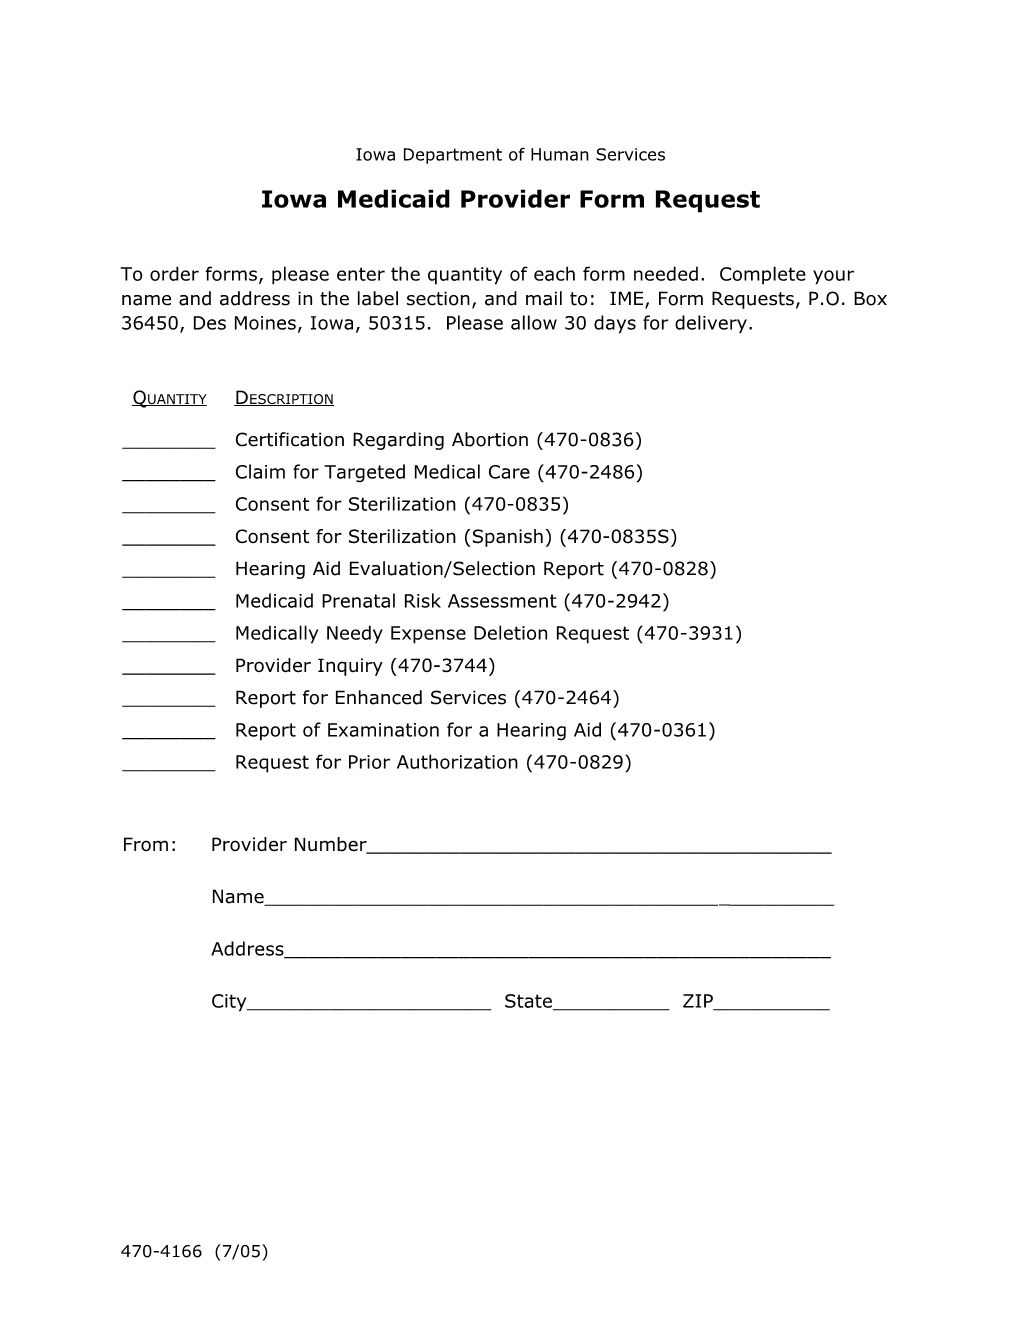 470-4166 Iowa Medicaid Provider Form Request